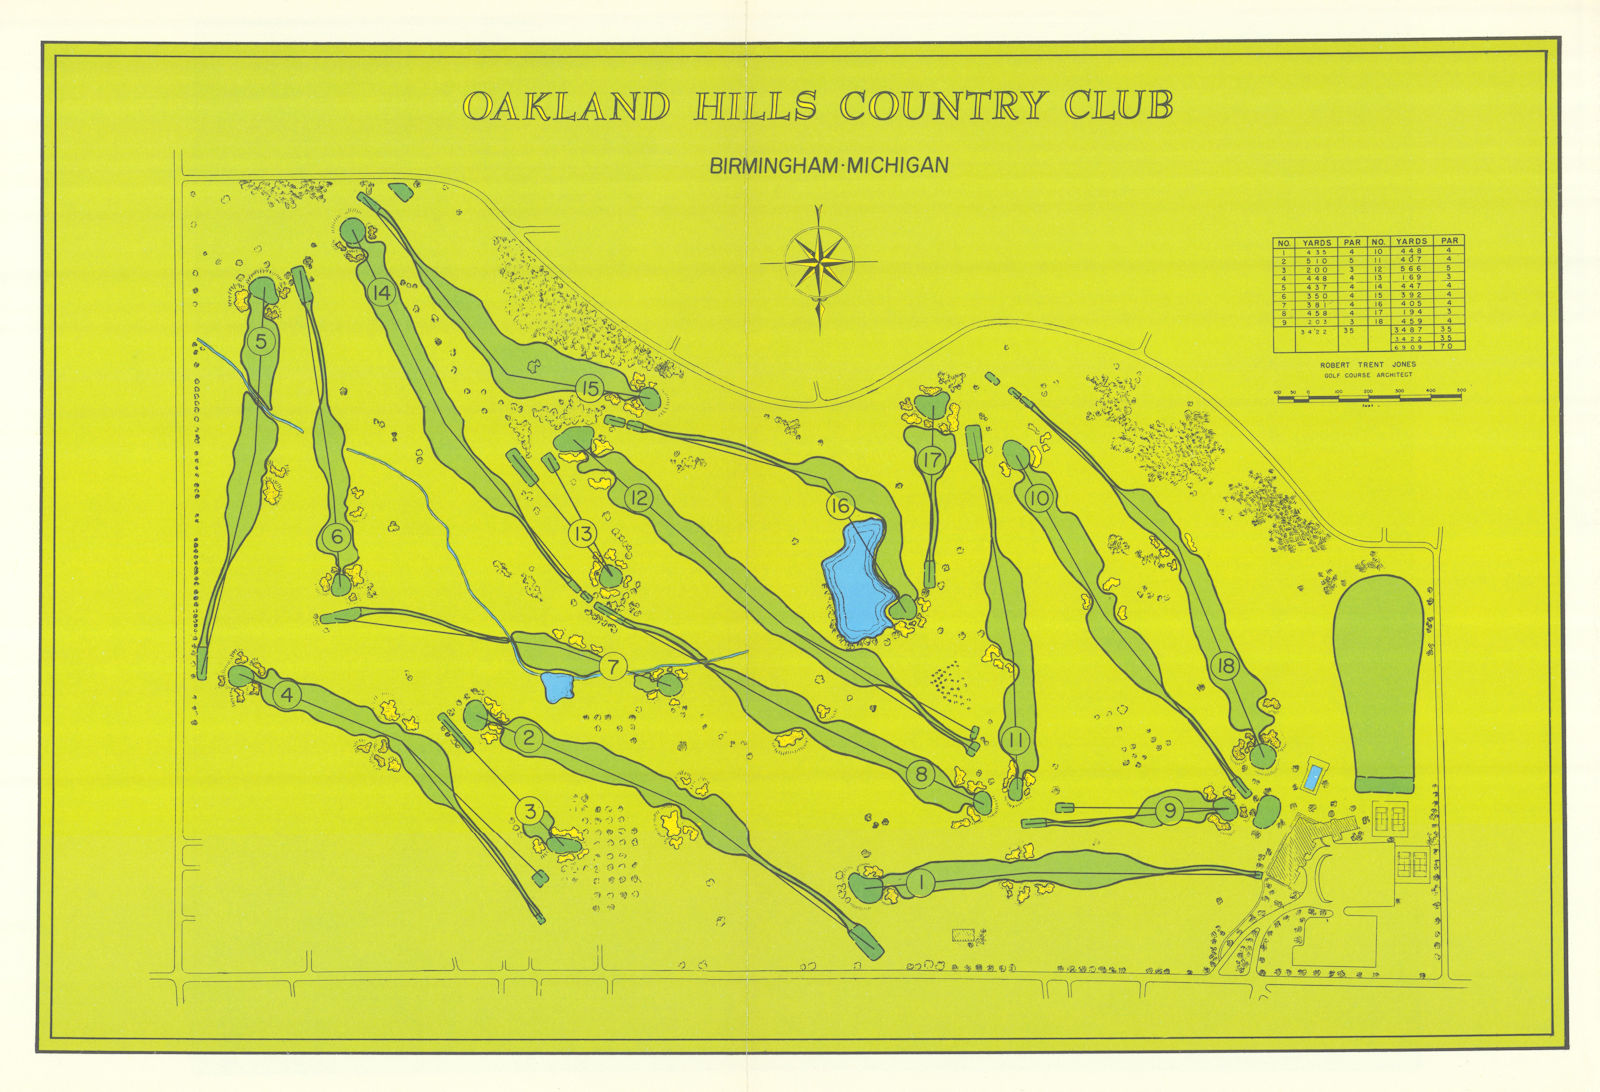 Associate Product Oakland Hills Country Club Michigan Robert Trent Jones golf course plan 1966 map